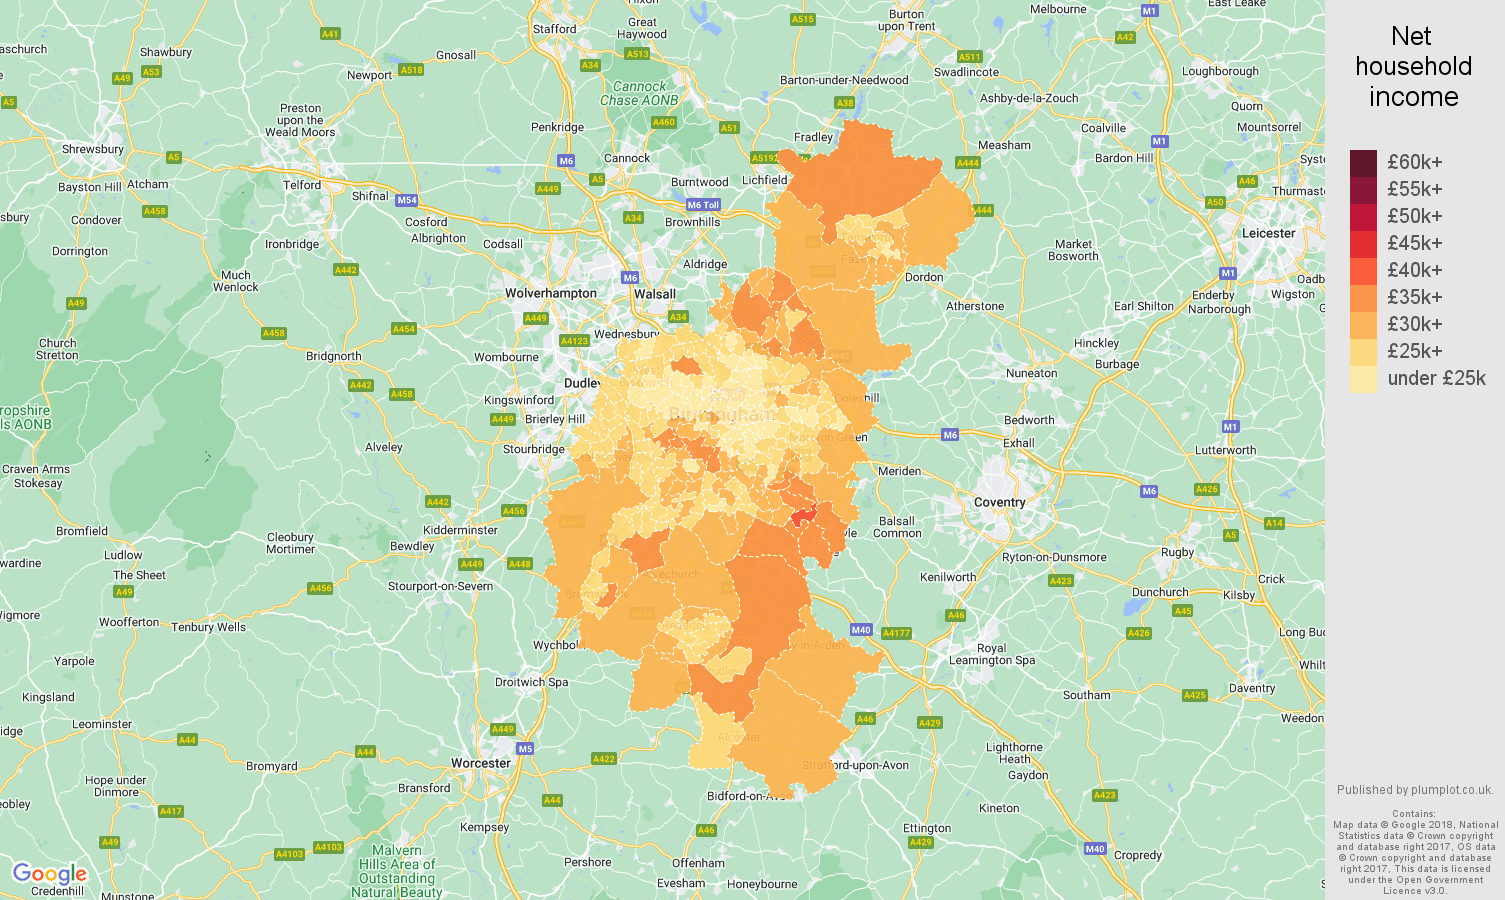 Birmingham net household income map